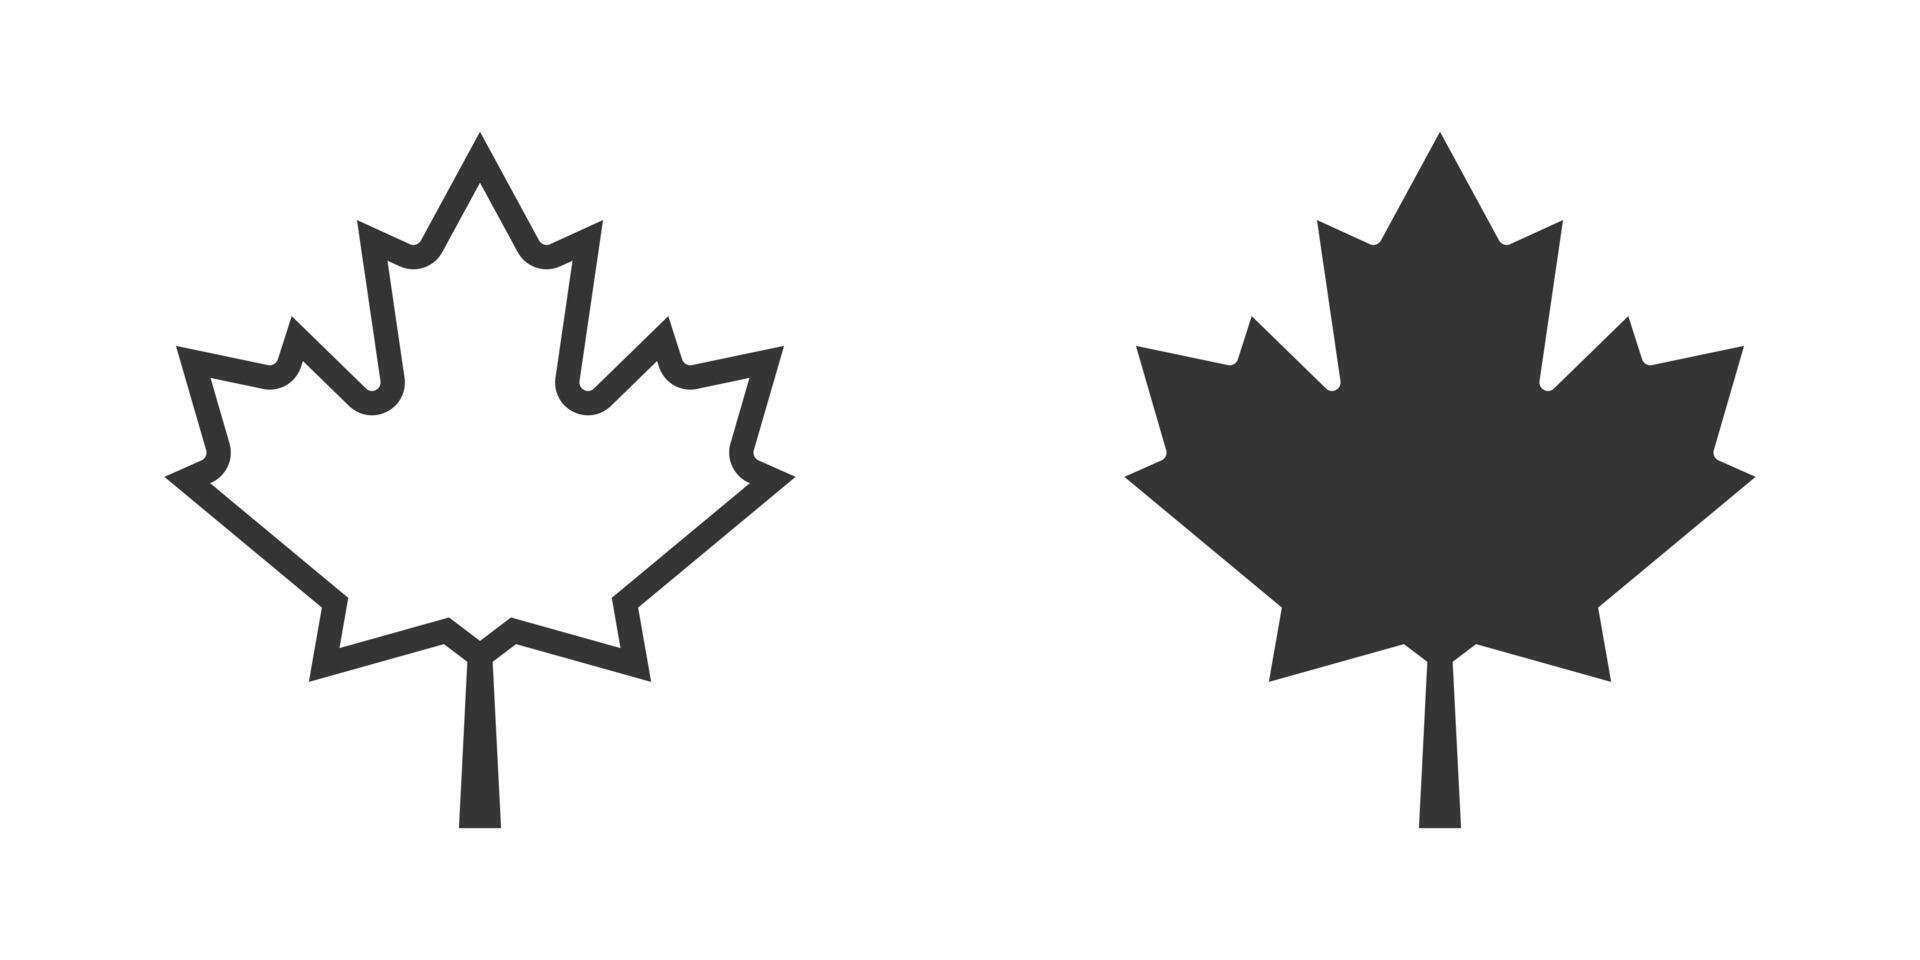 Maple leaf icon. Autumn leaf canadian icon. Vector illustration.